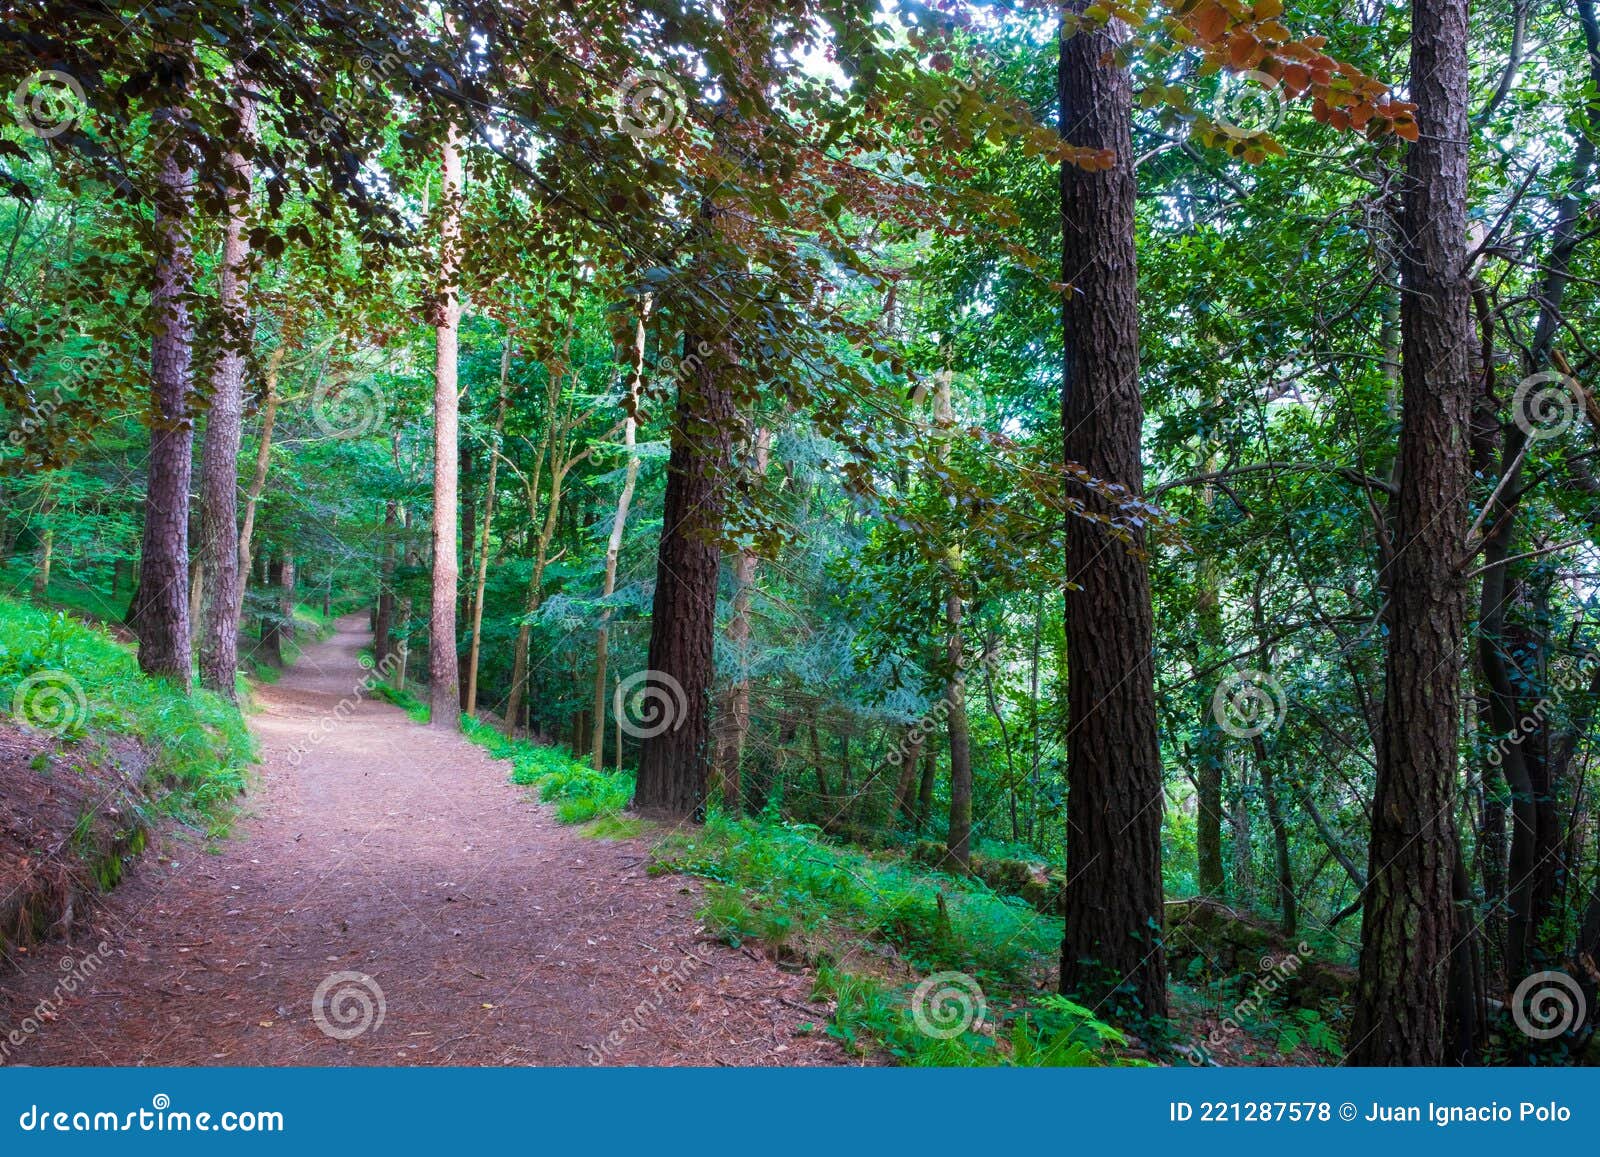 path in the forest, monte ulia in donostia-san sebastian.